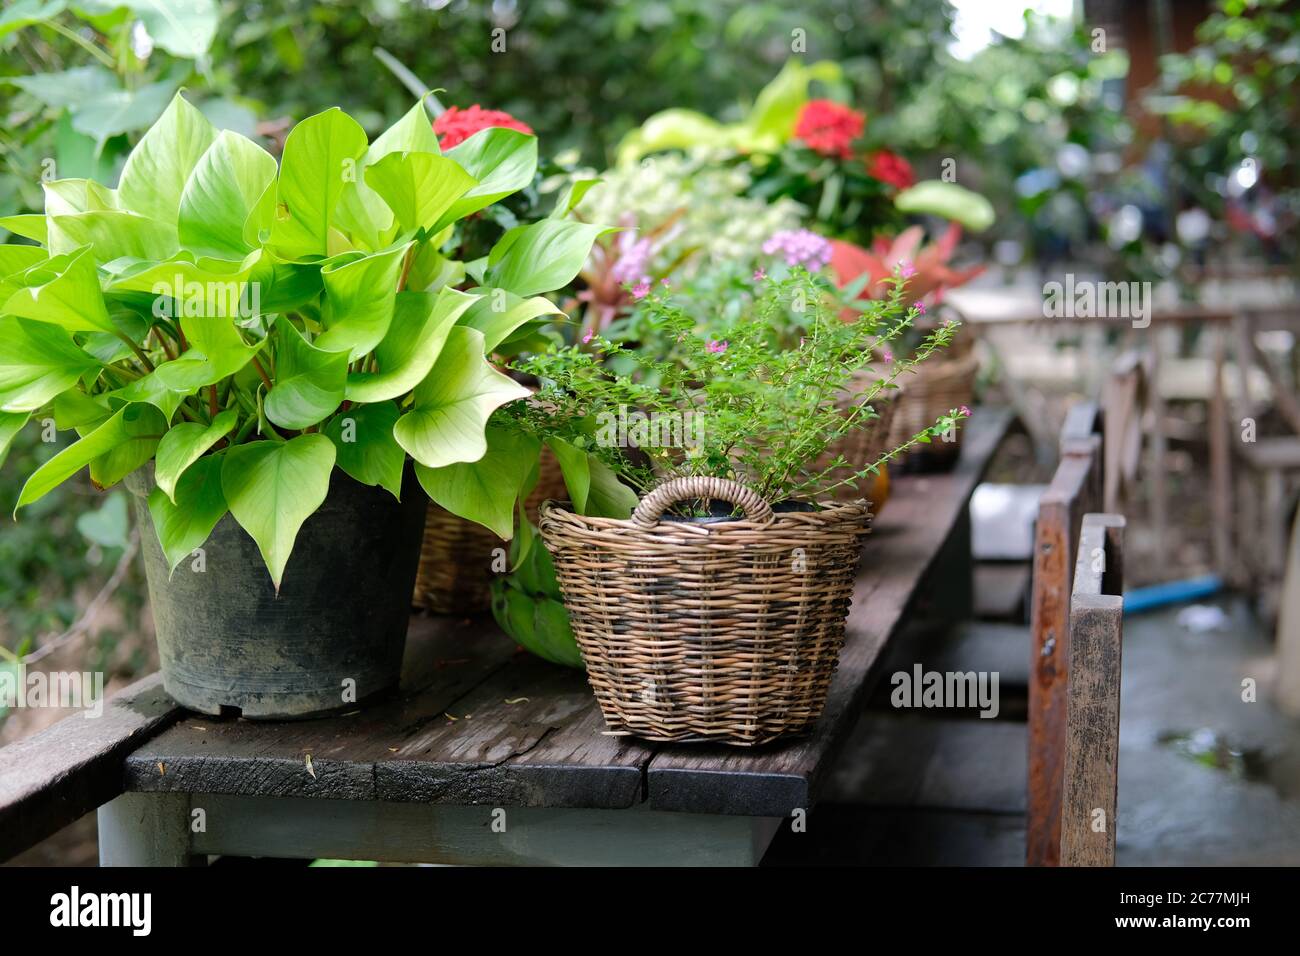 flower & green plant leaves in wicker basket decorating on terrace balcony Stock Photo